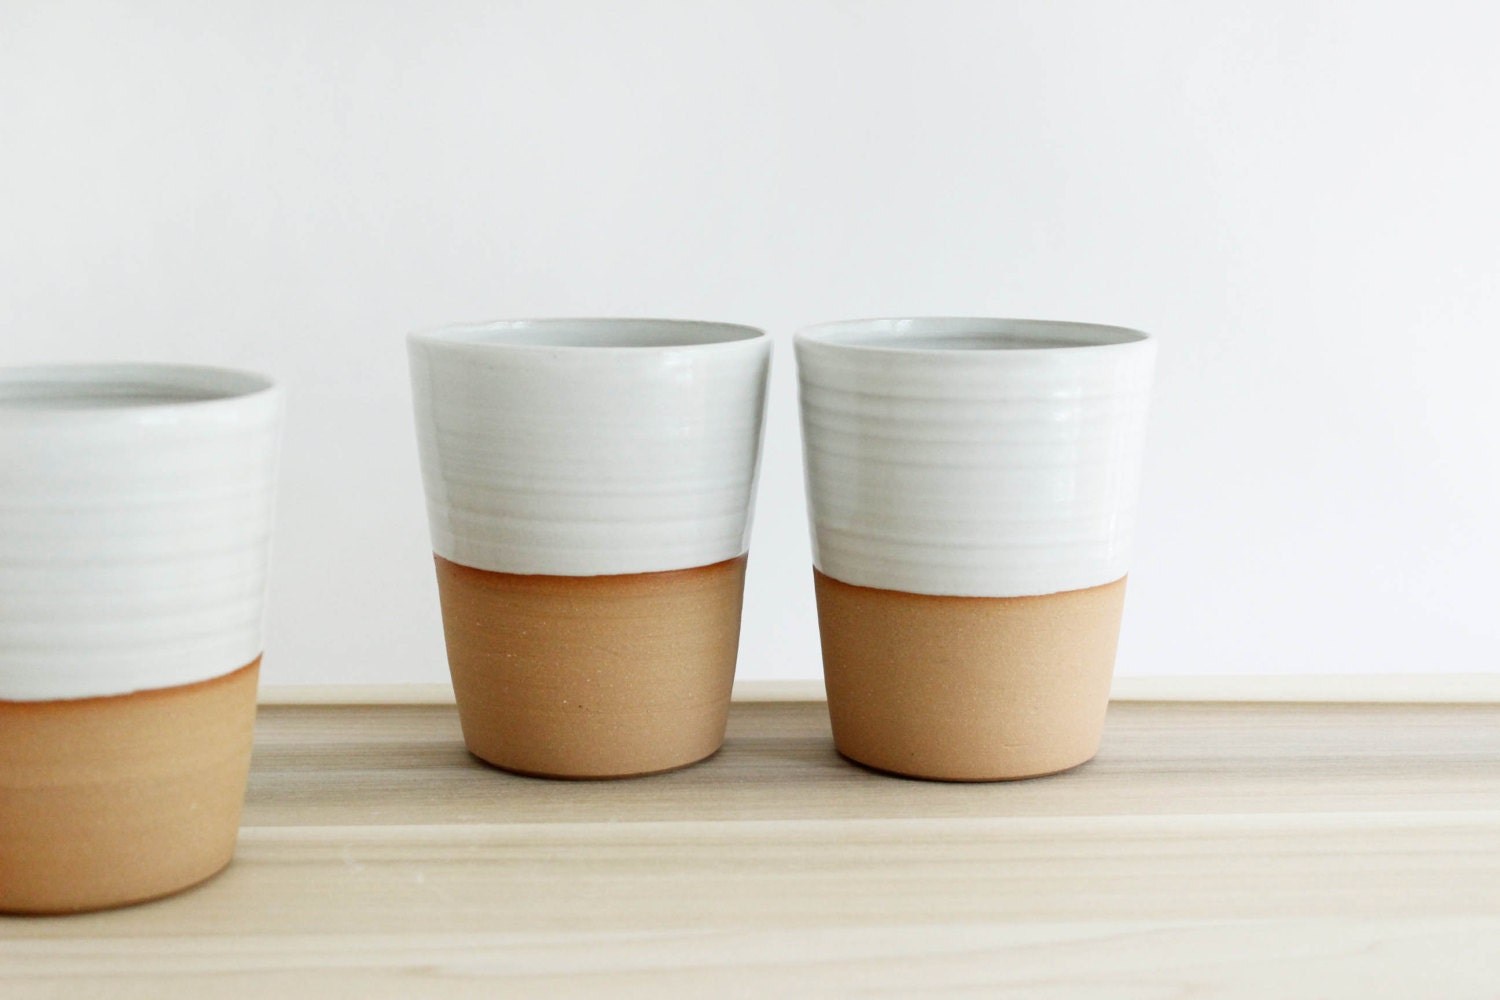 Four mugs without handles, white minimalist ceramic pottery coffee mug, tall tumbler set - juliapaulpottery